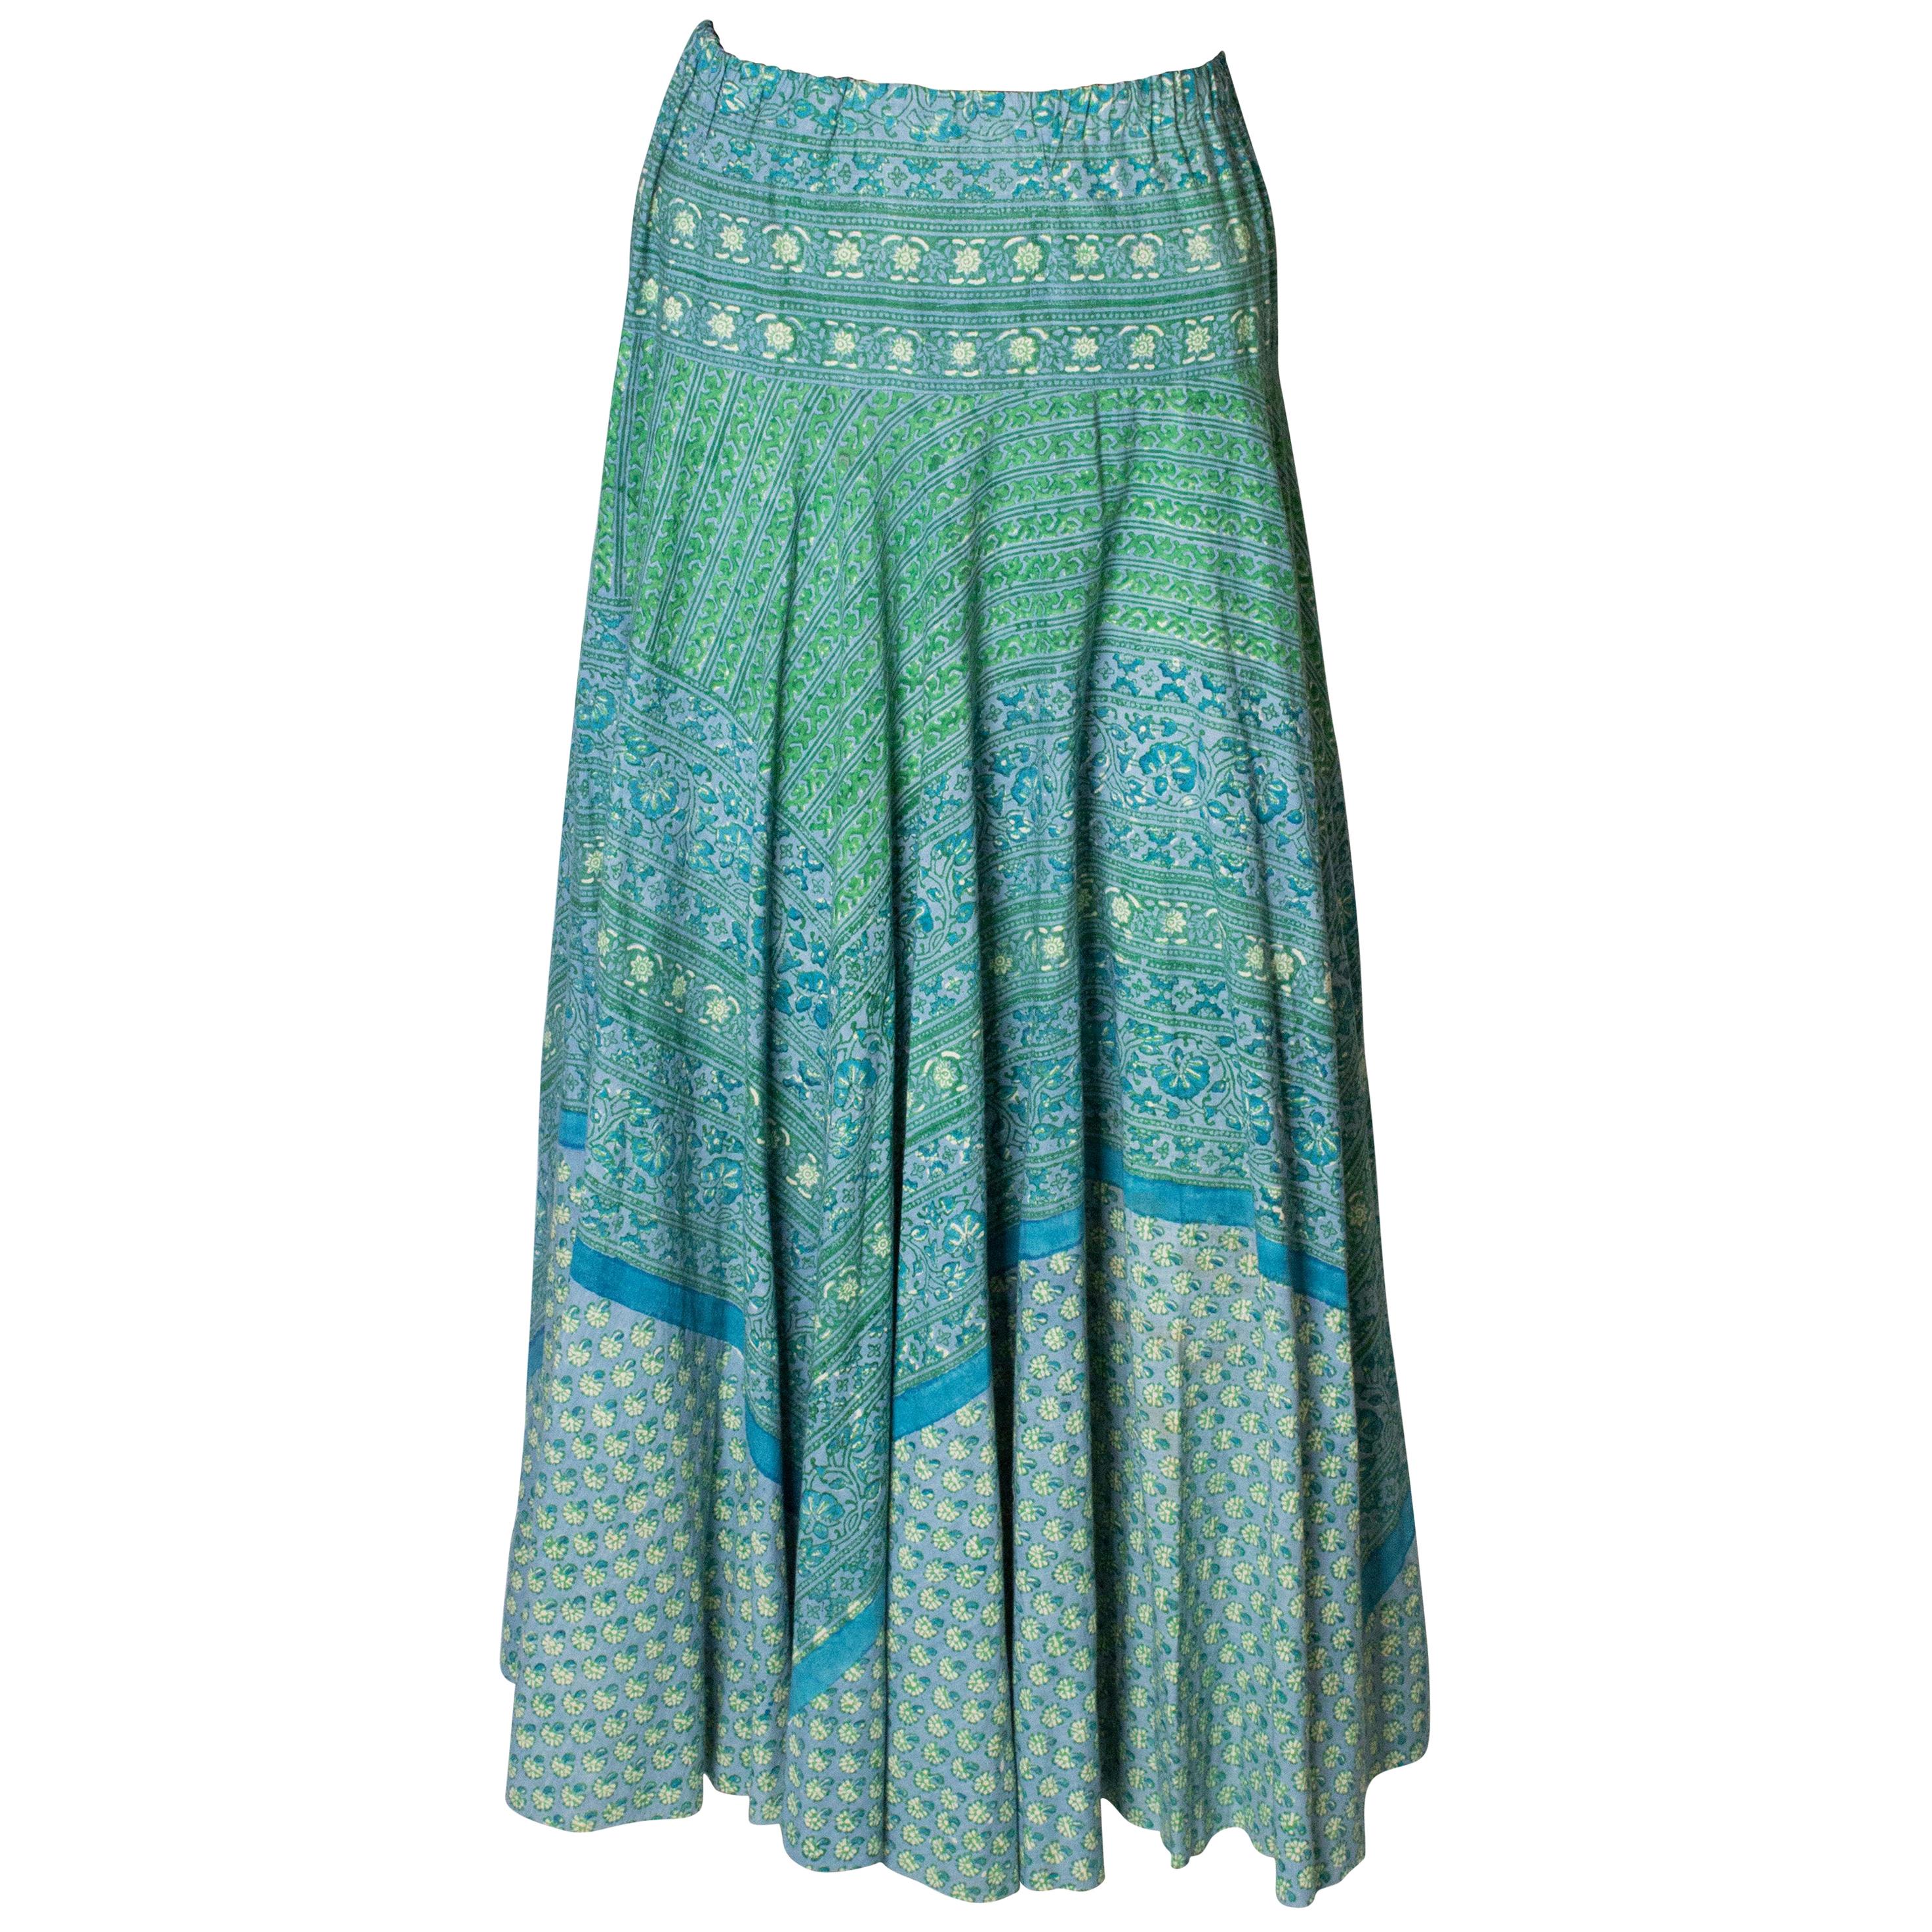 A Vintage 1970s Floral Printed Cotton Boho Summer  Skirt